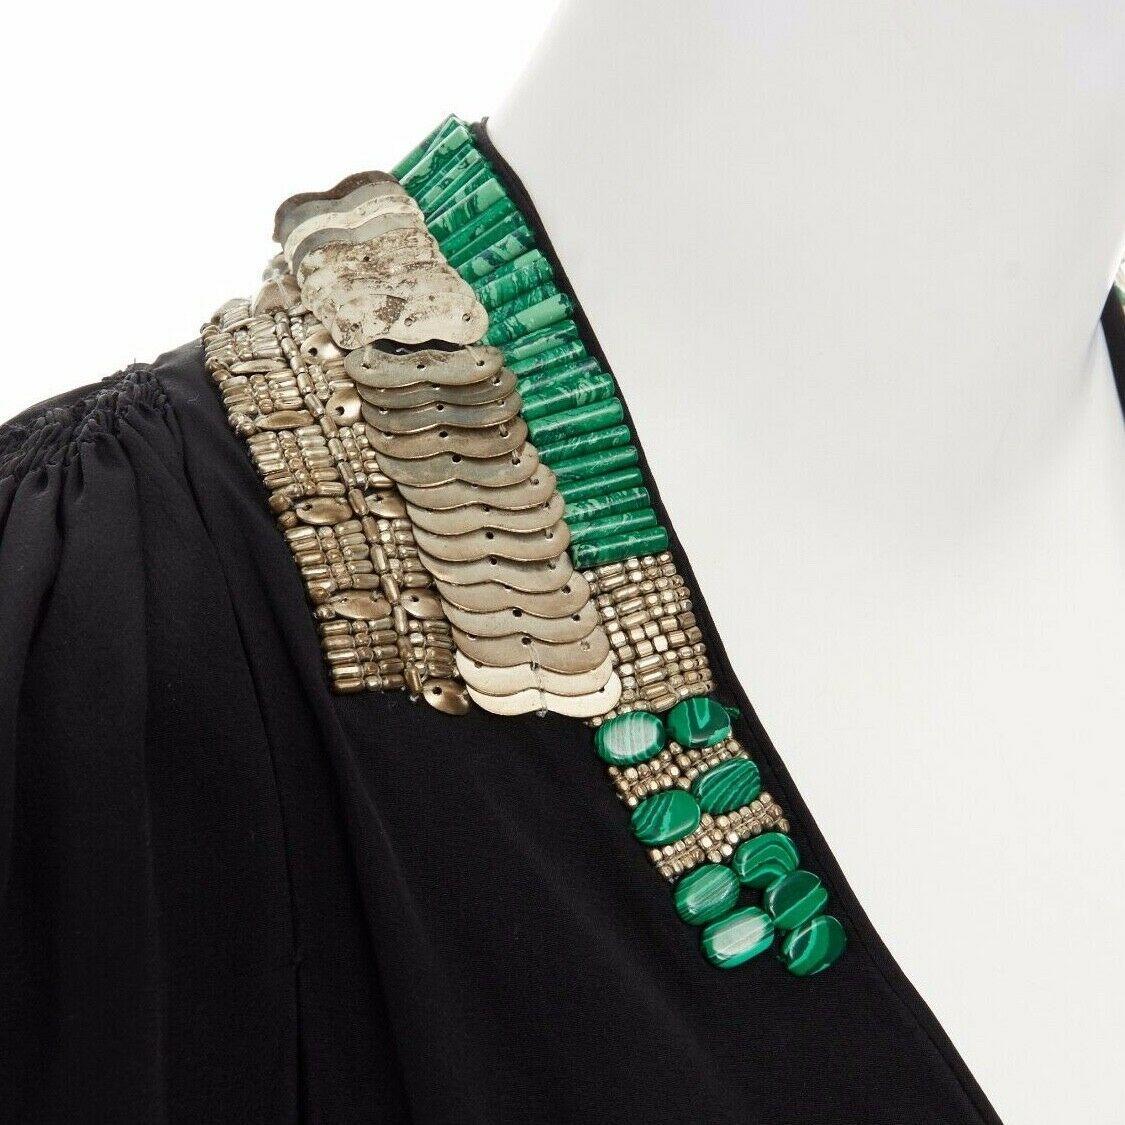 DRIES VAN NOTEN black oriental beaded embroidered silk dress FR36 US4 UK8 IT40 S

DRIES VAN NOTEN
100% SILK . ANTIQUE LOOK BRASS HEADS, SEQUINS, EMBELLISHMENT WITH ANGULAR PURPLE STONES AND JADE-LIKE GREEN BEADS EMBROIDERED ALONG NECKLINE . 
SCOOPED